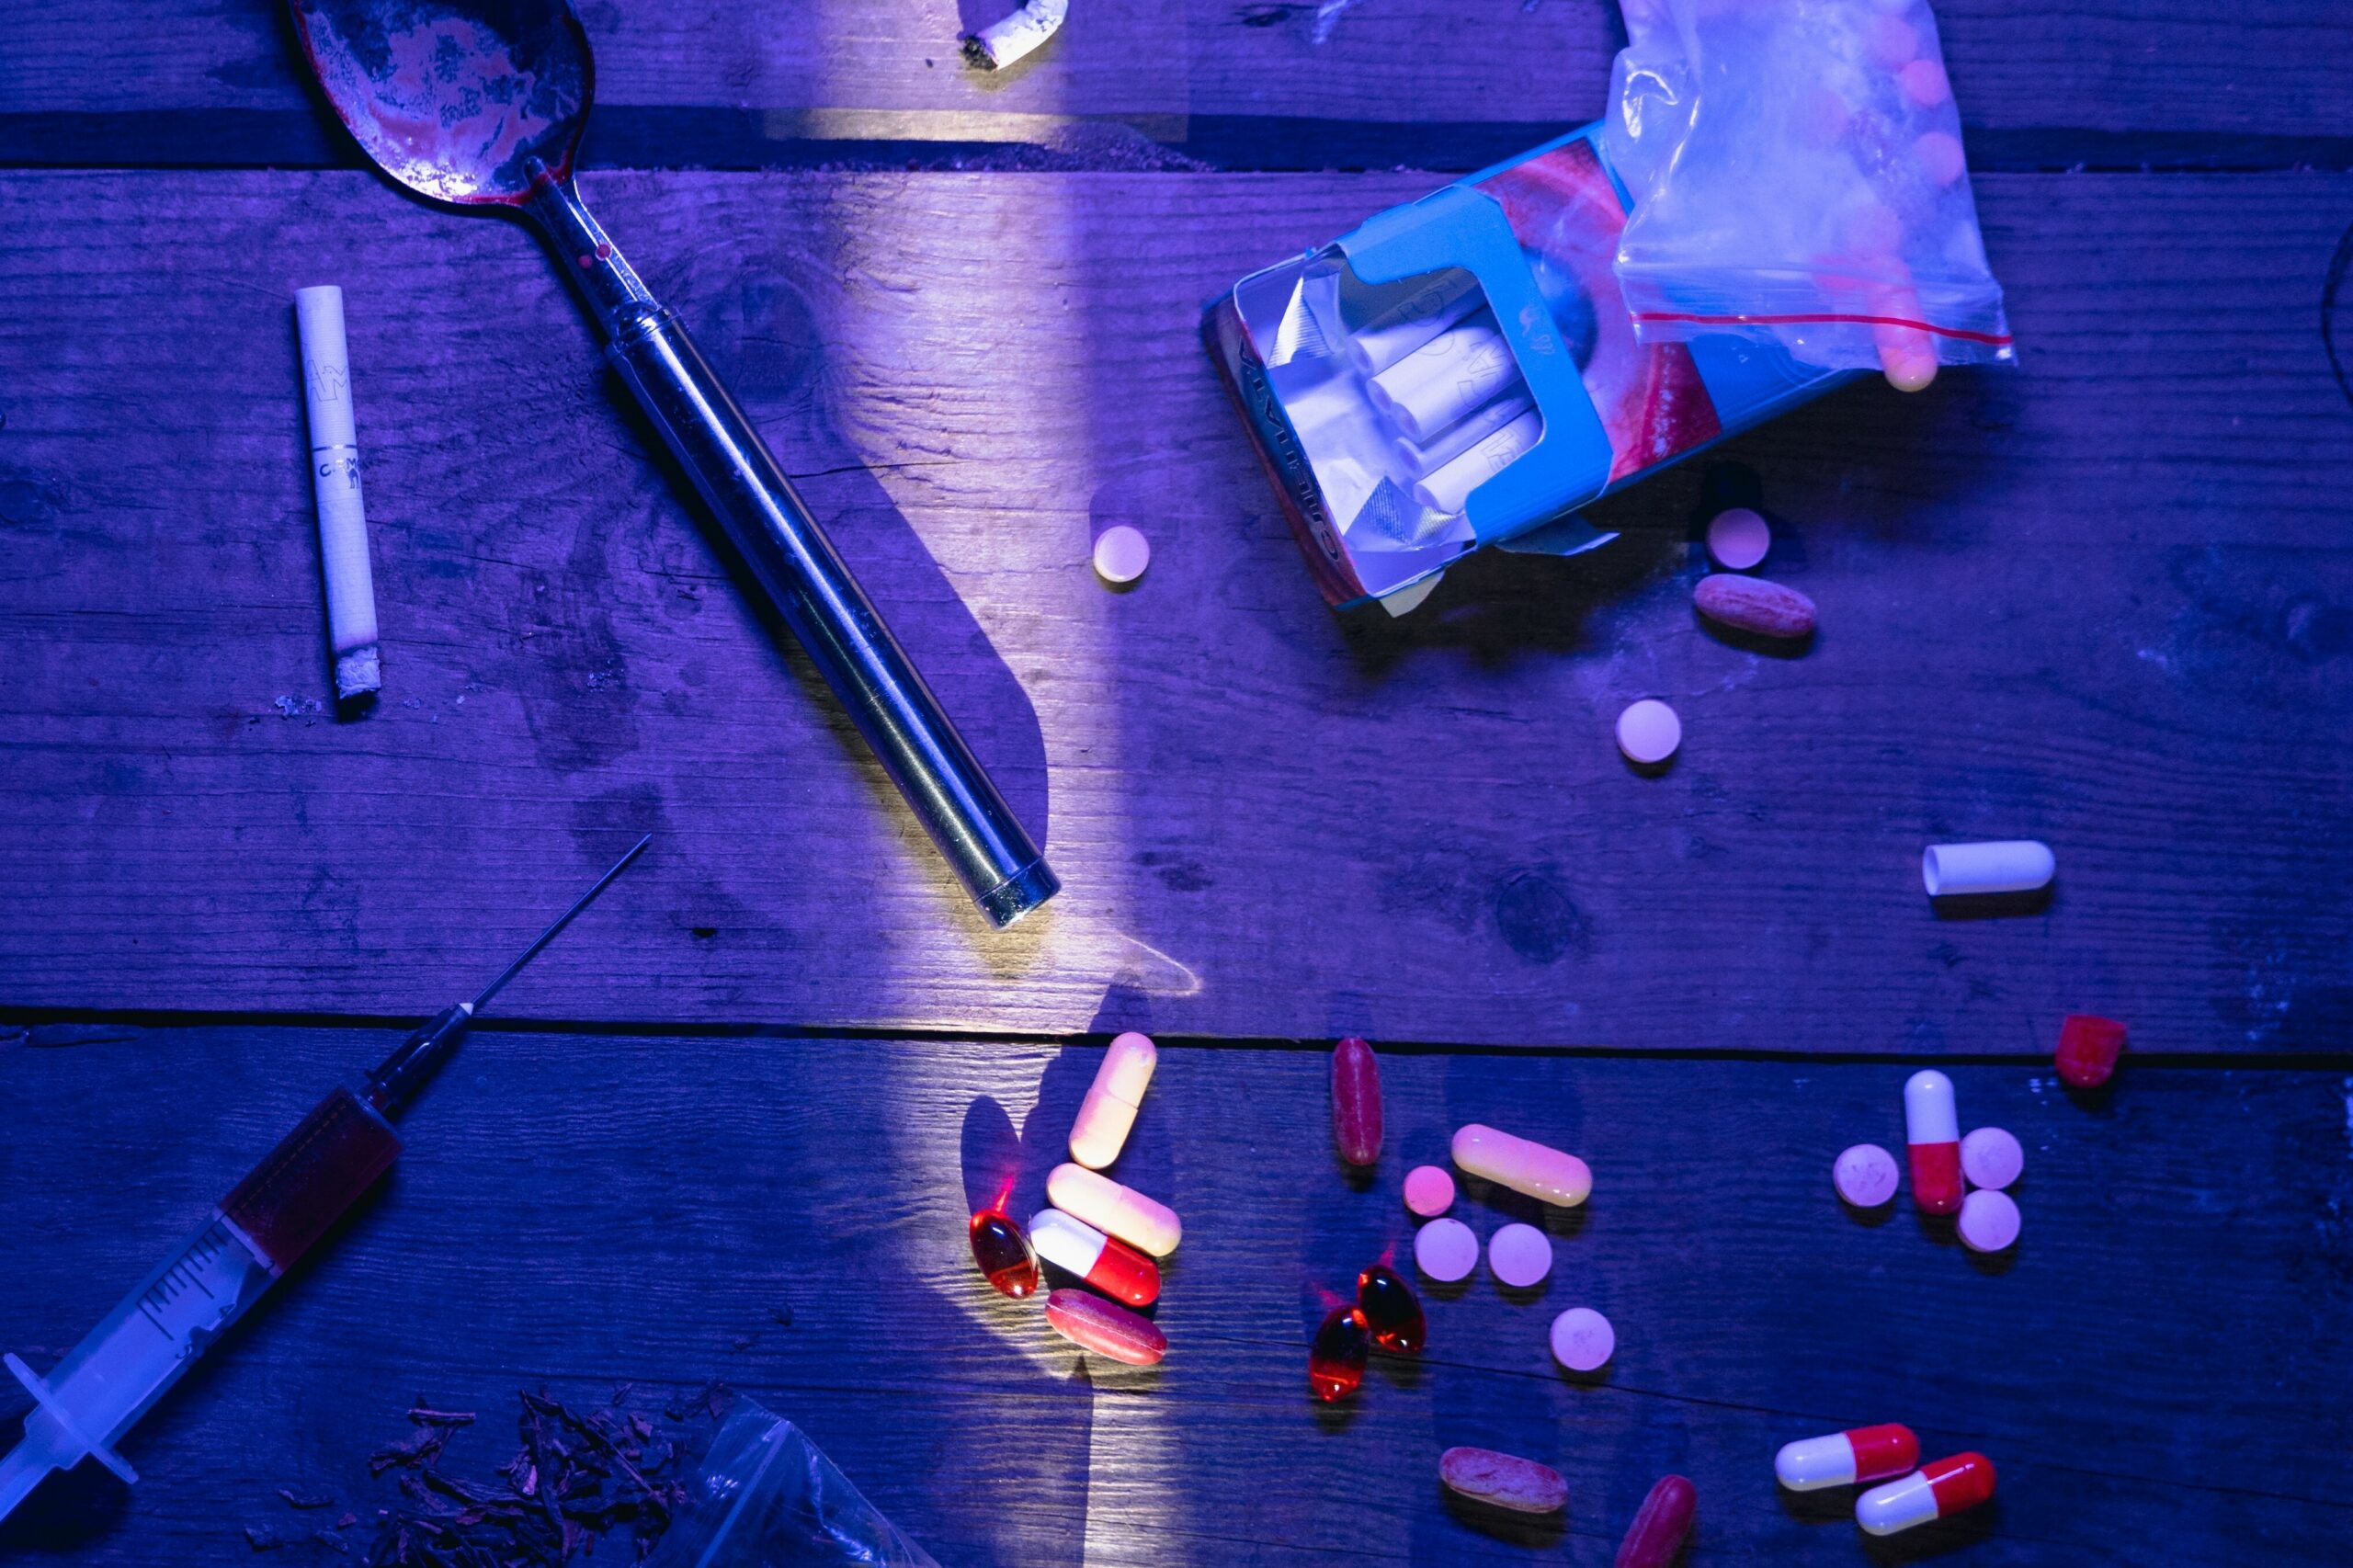 drug paraphernalia on a table